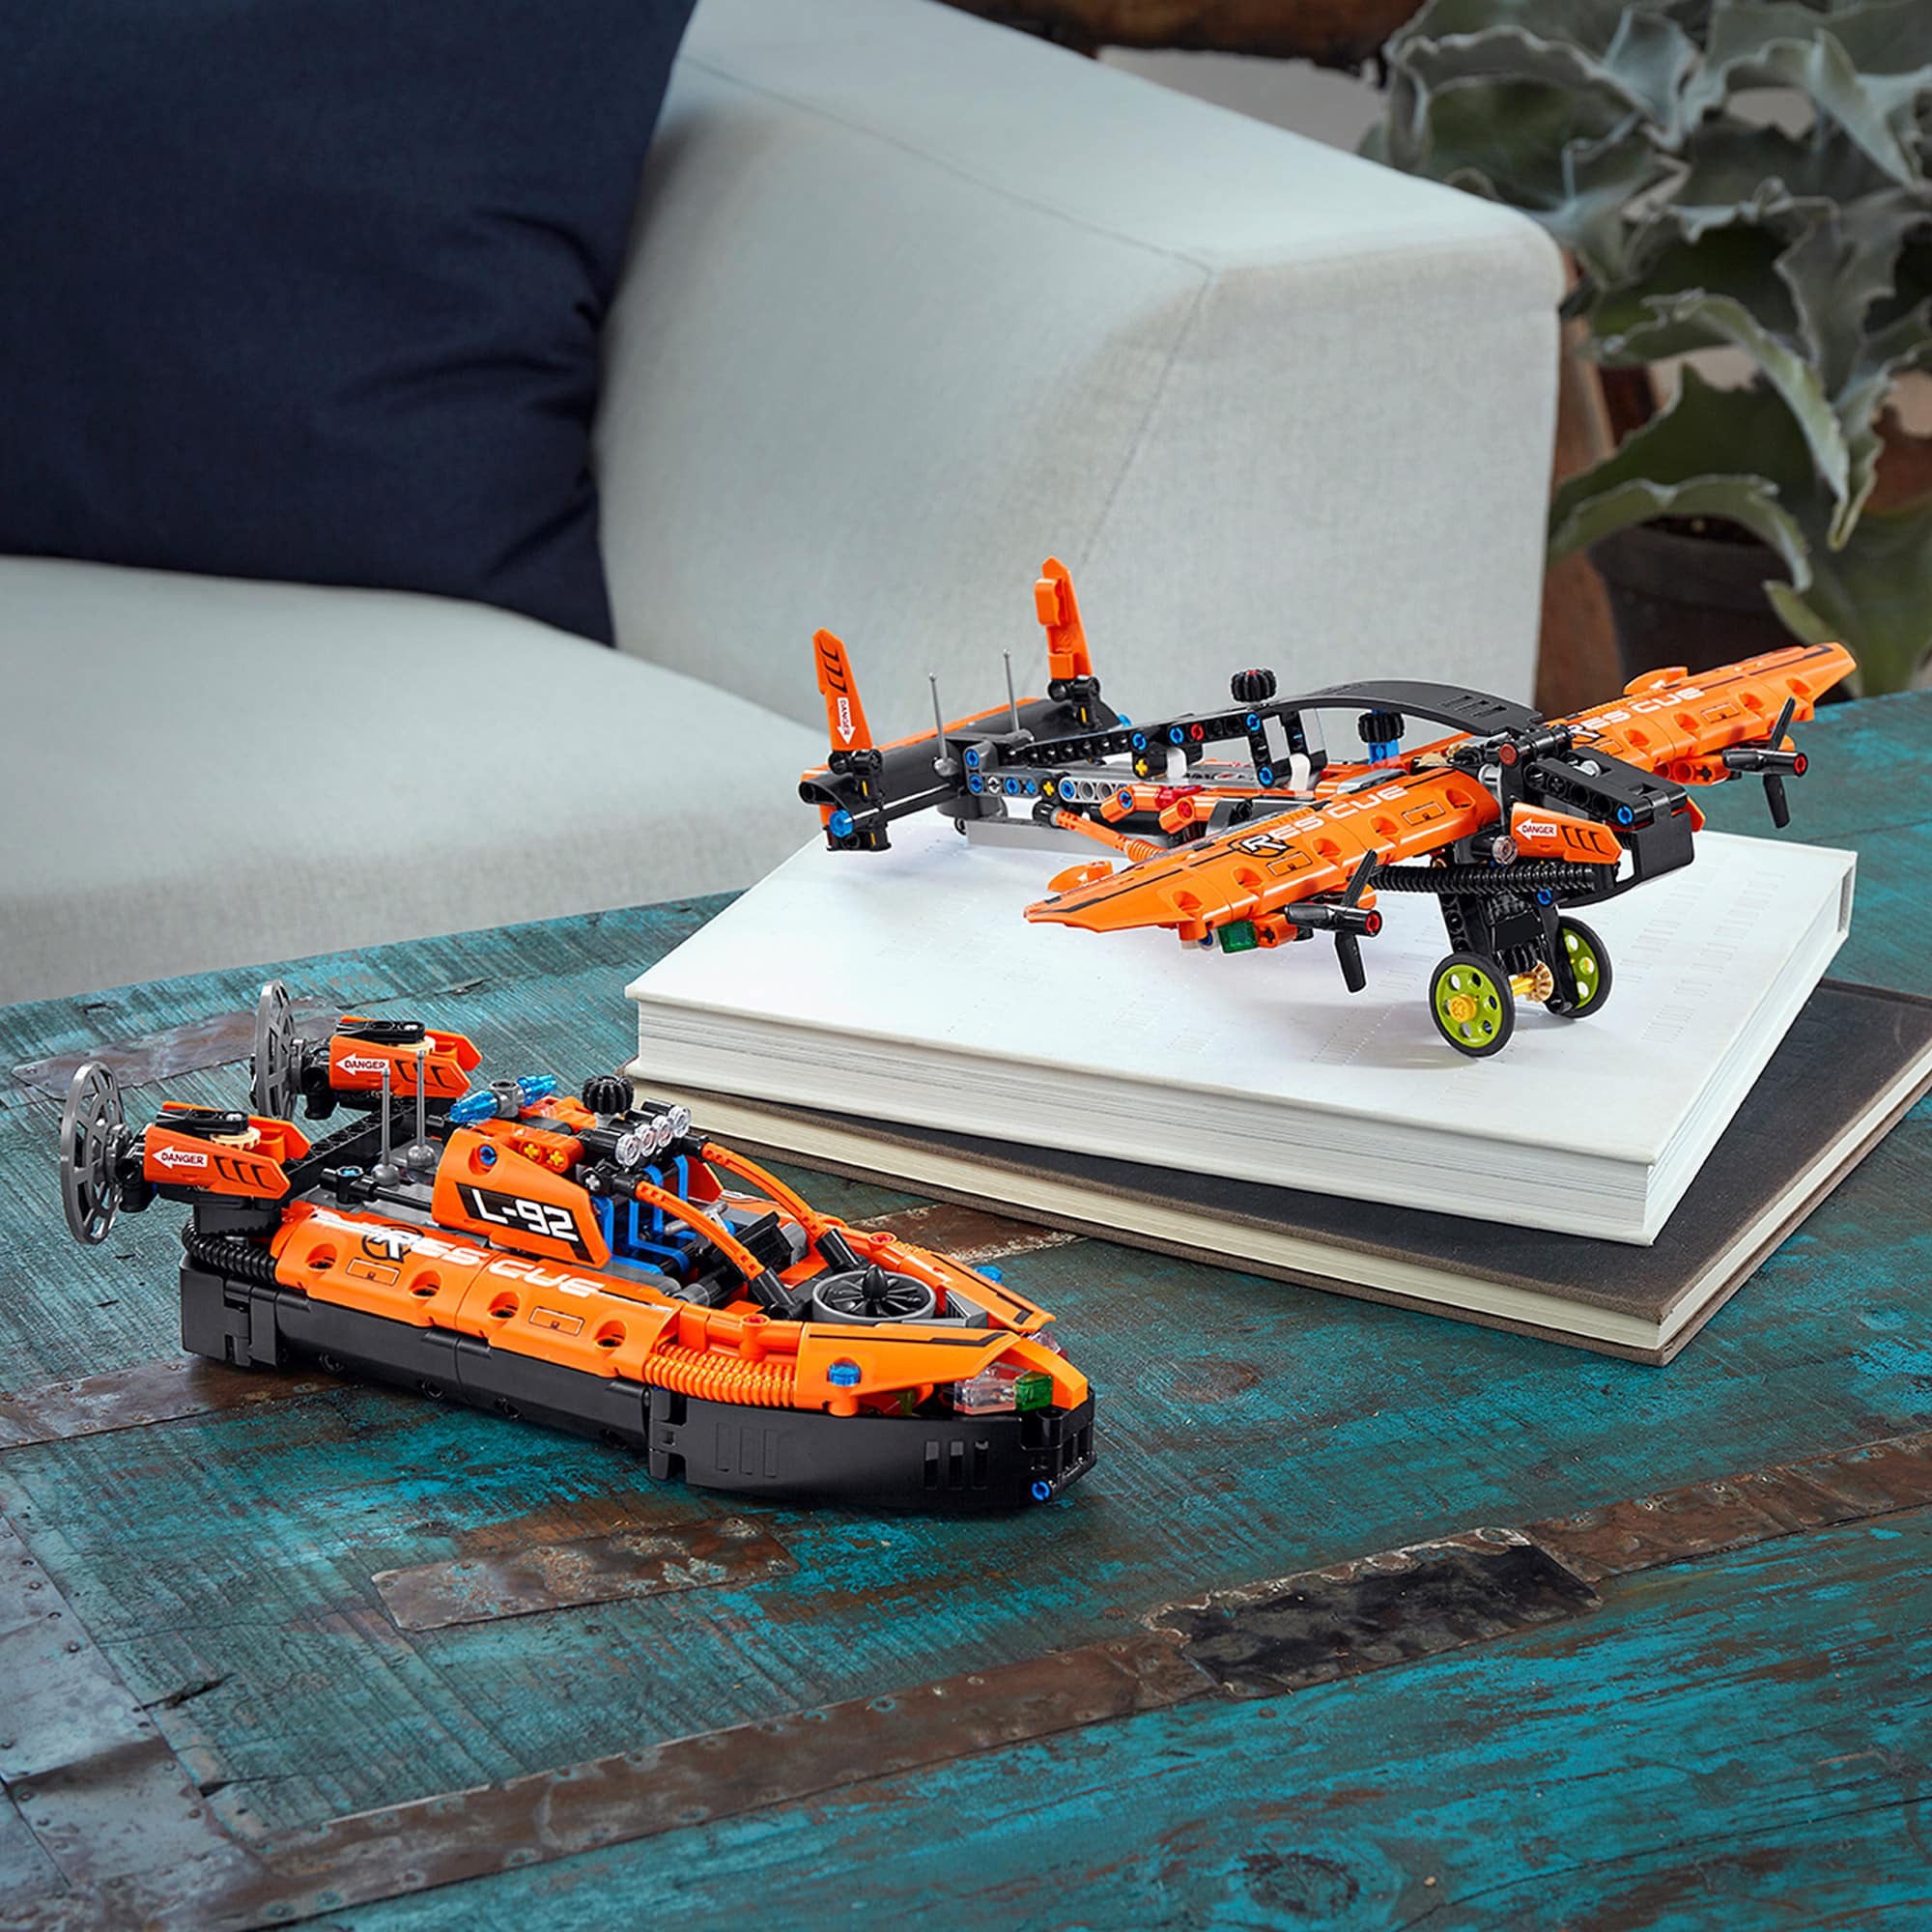 LEGO Technic 42120 - Rescue Hovercraft